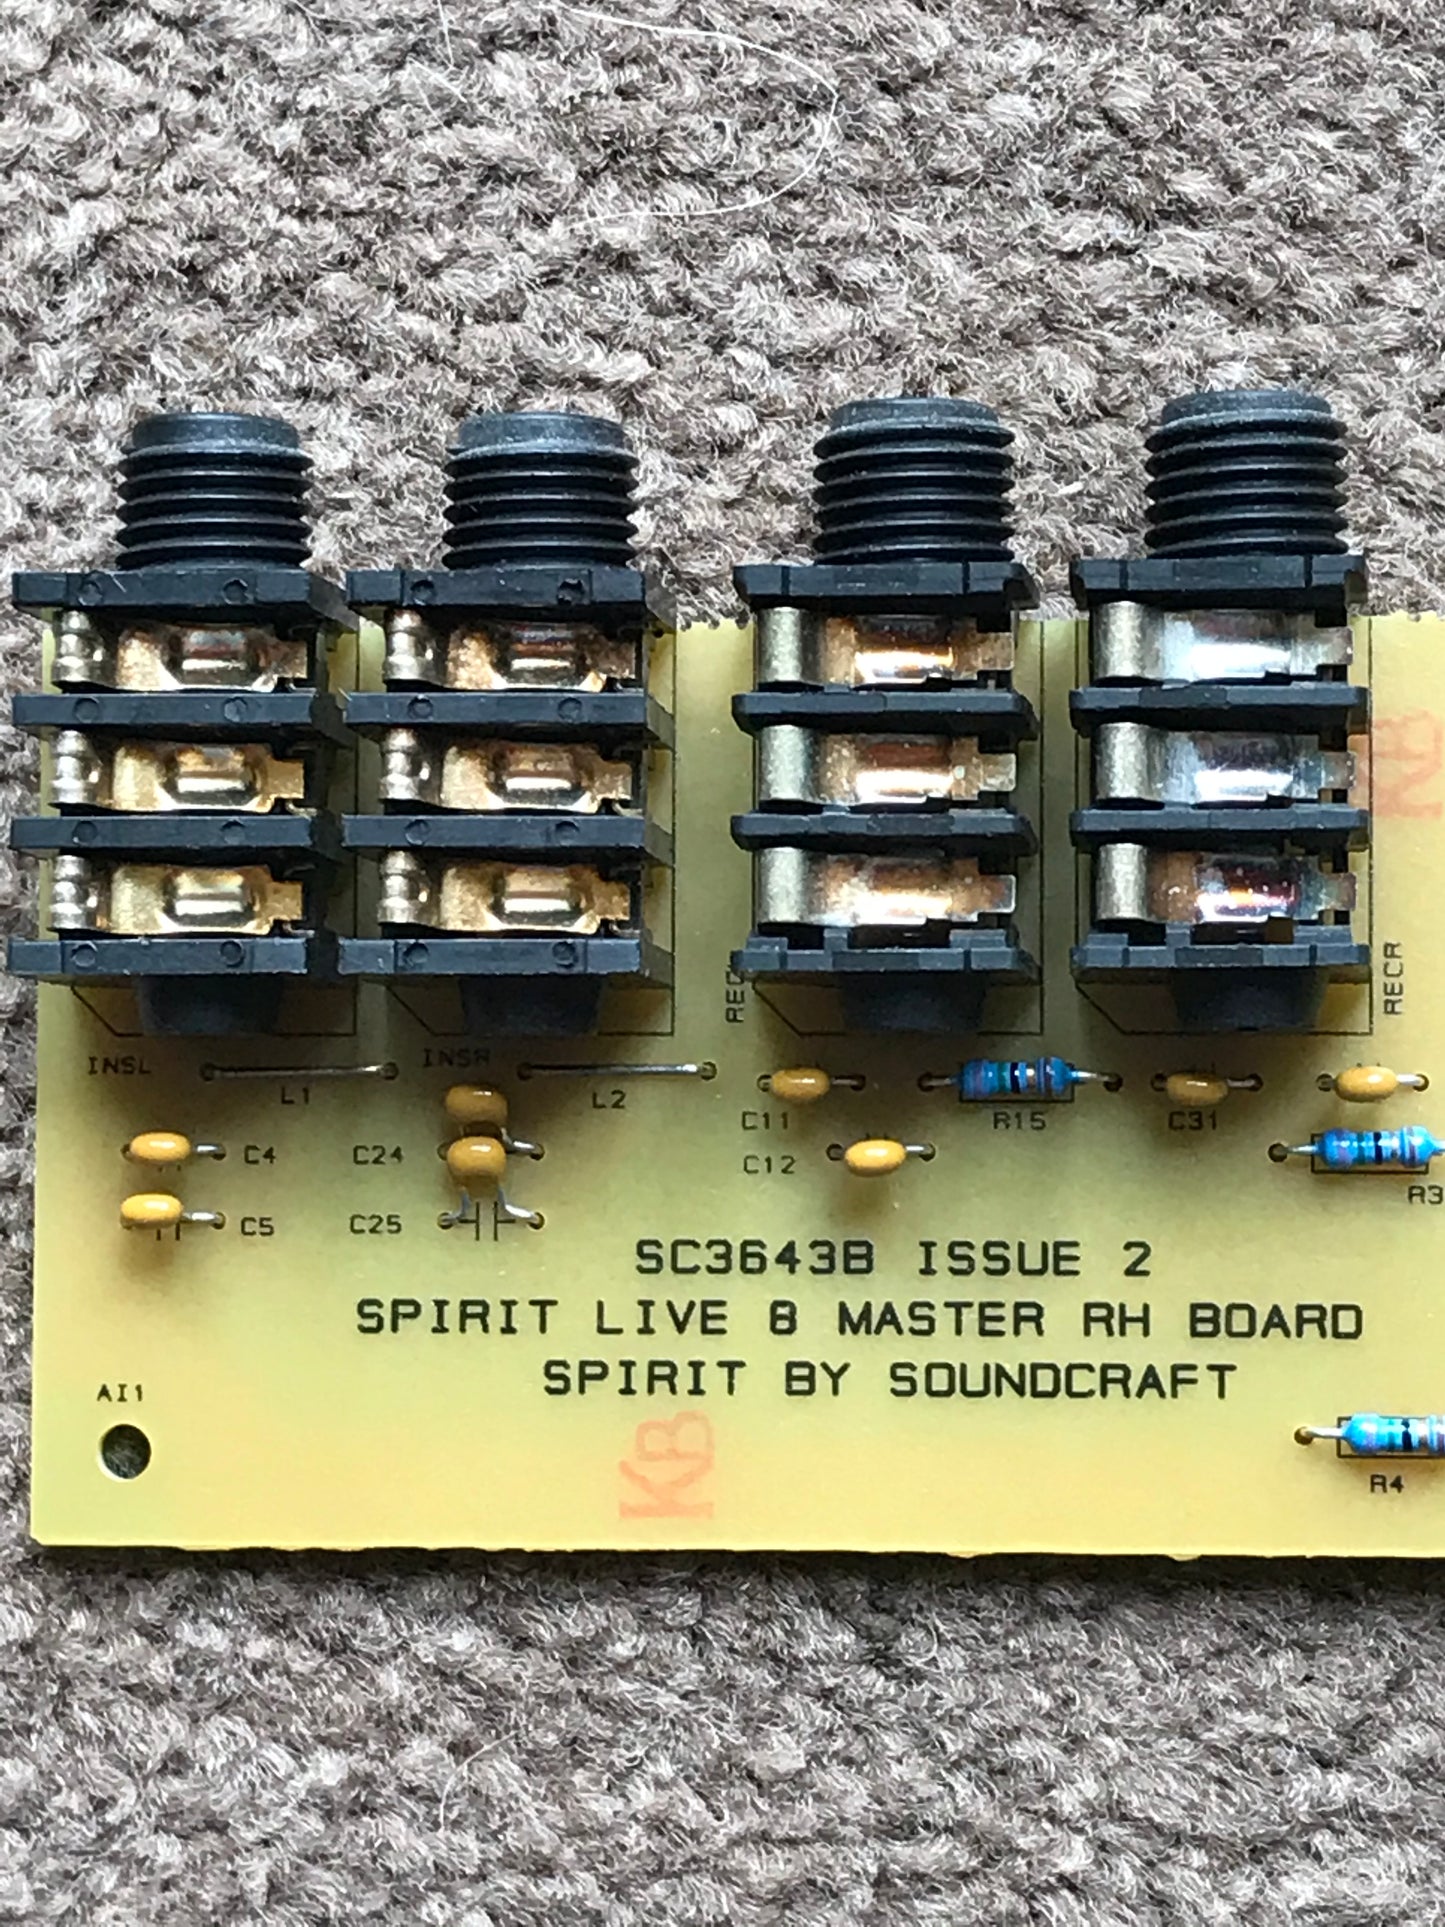 Soundcraft Spirit Live 8 Master RH board SC3643B Issue 2